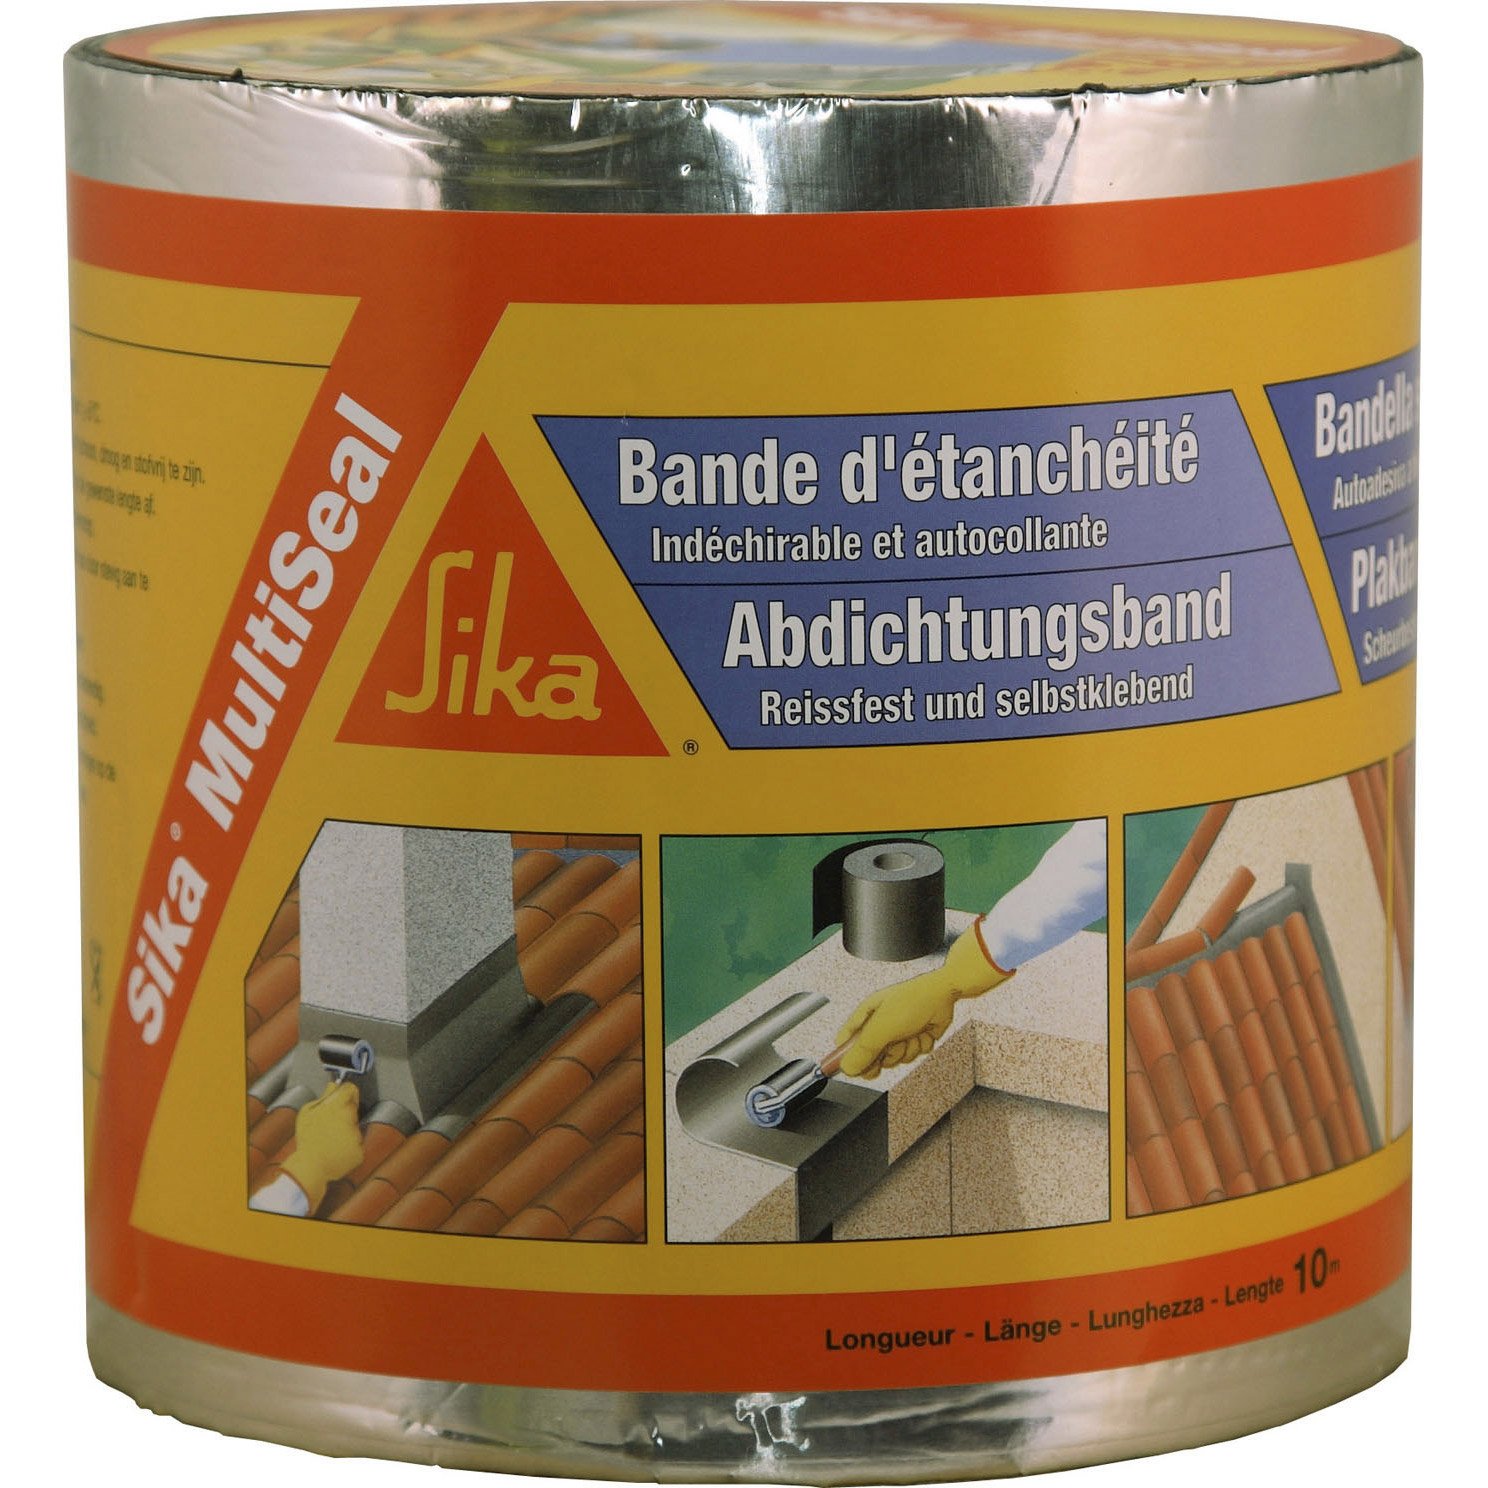 bande adhesive d etancheite sika multiseal l 10 x l 0 15 m 1151 g m2 8